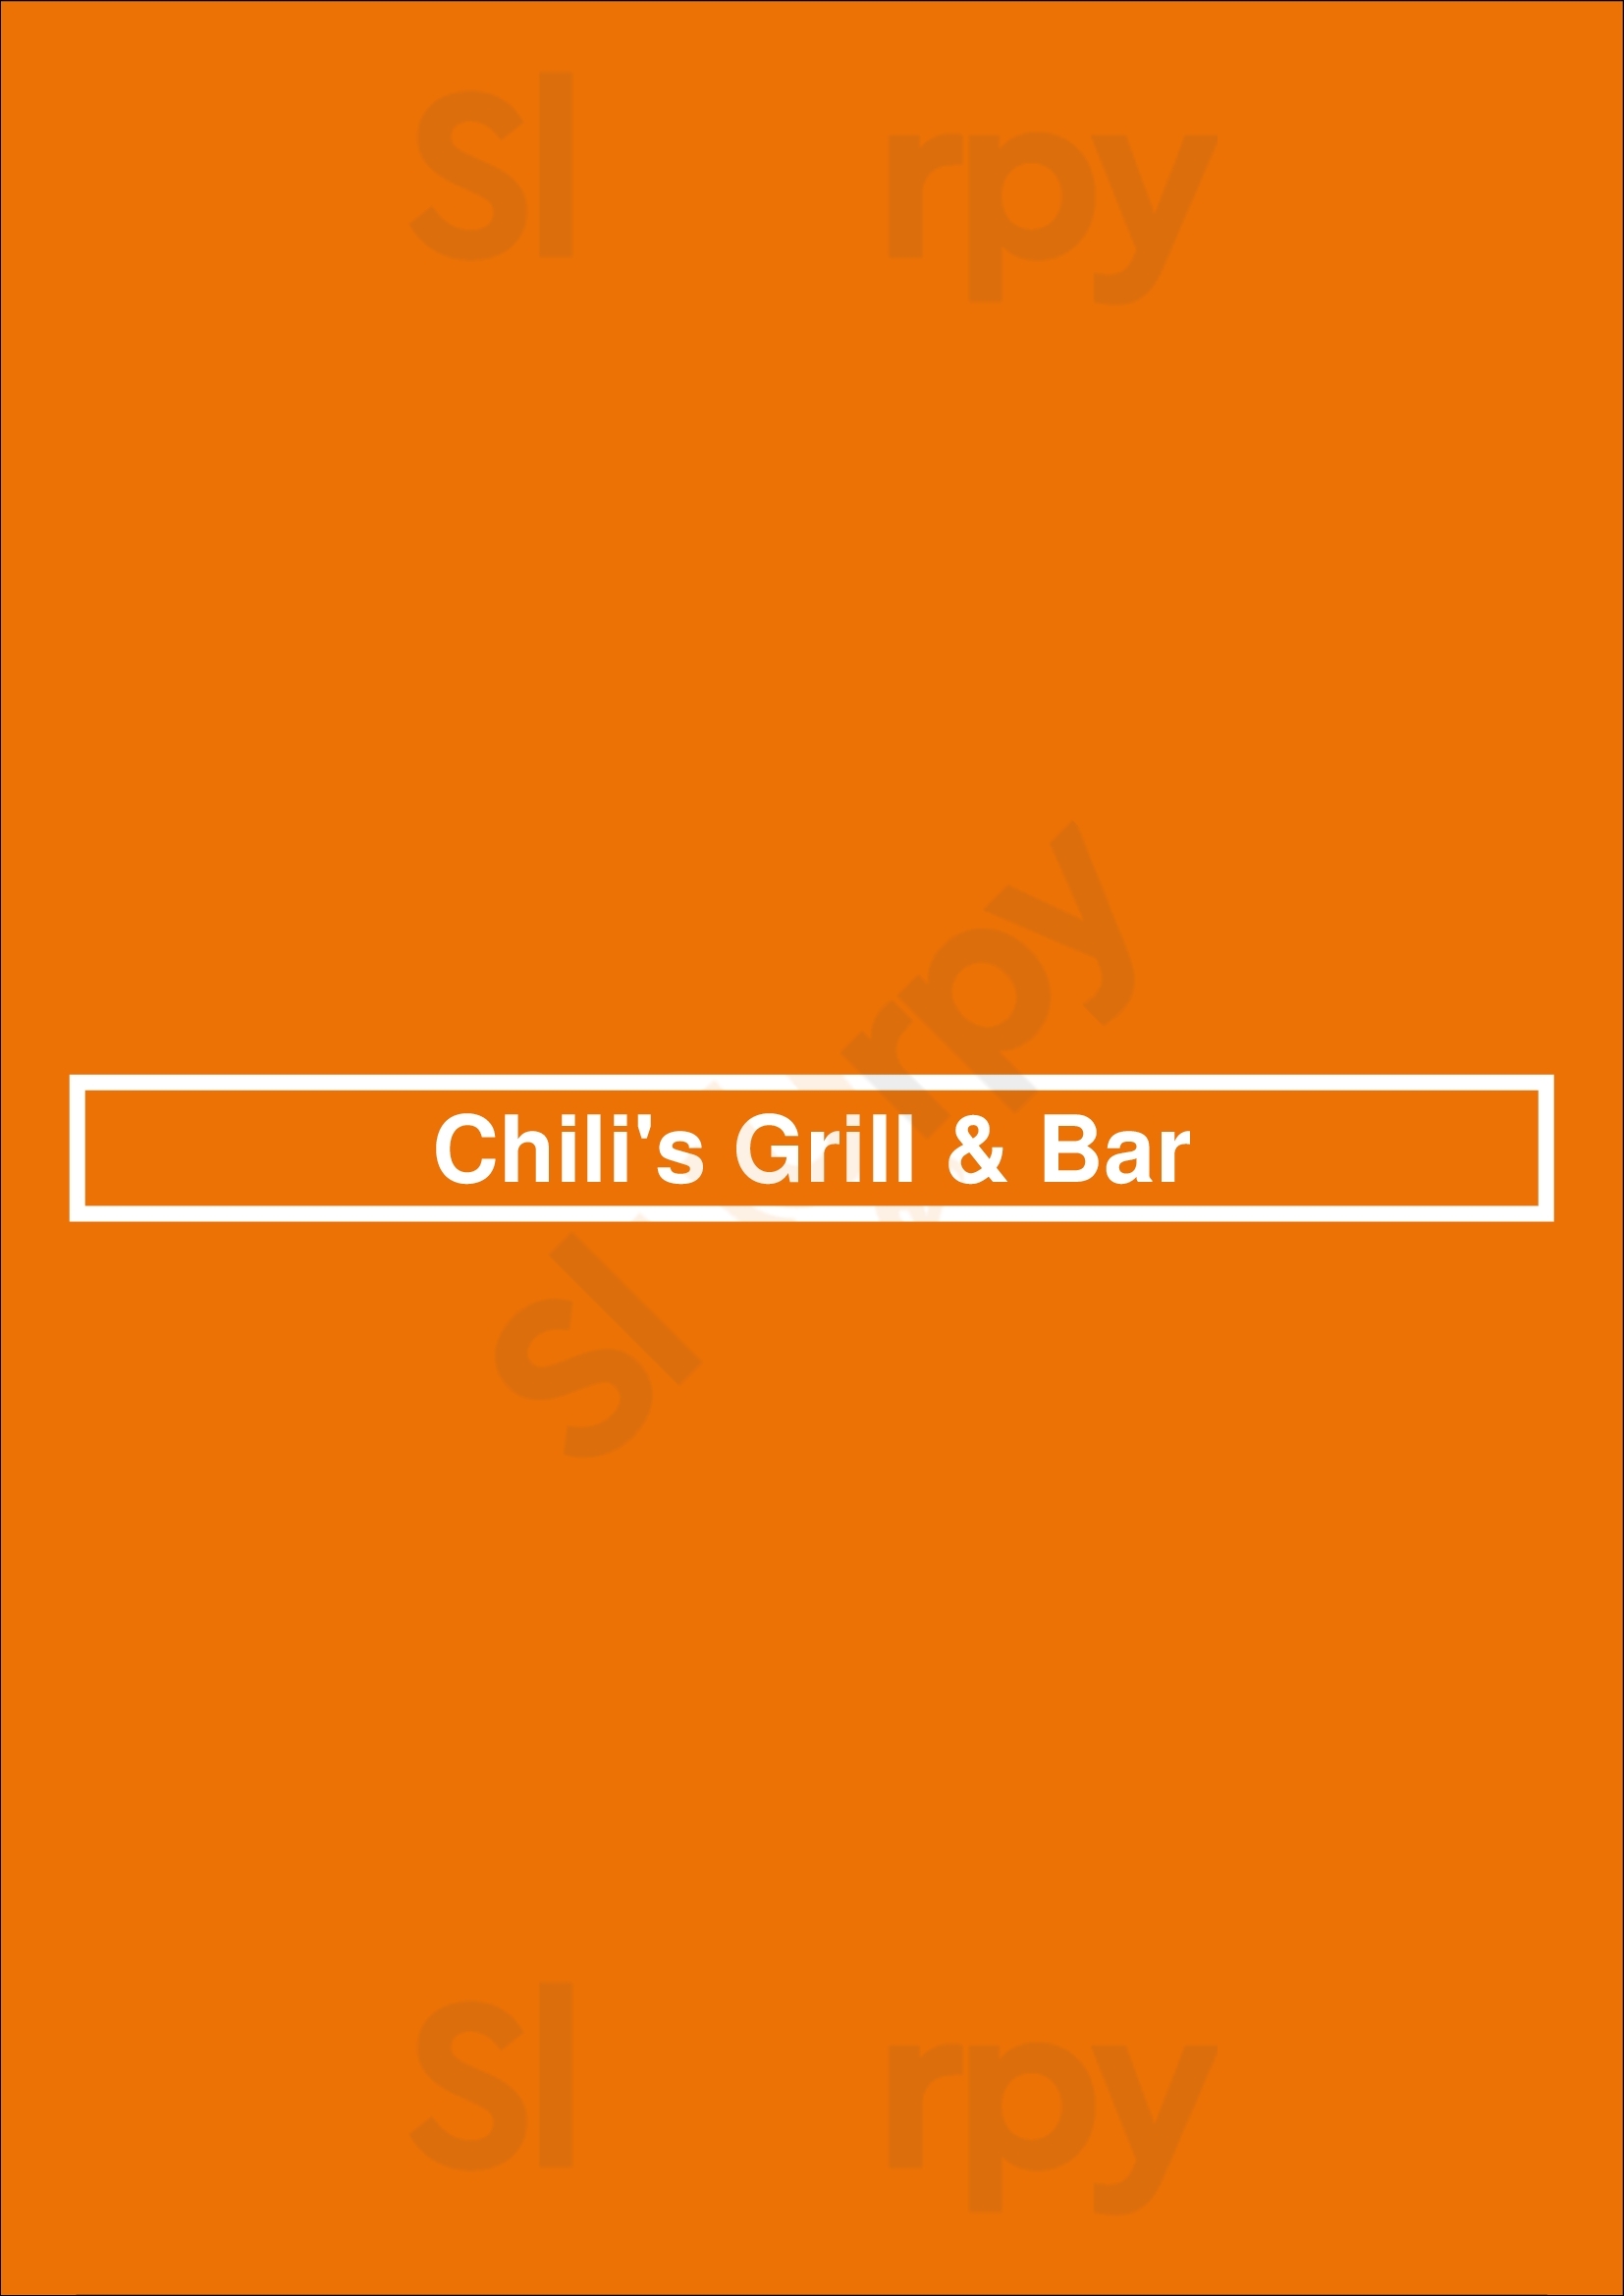 Chili's Grill & Bar Fayetteville Menu - 1